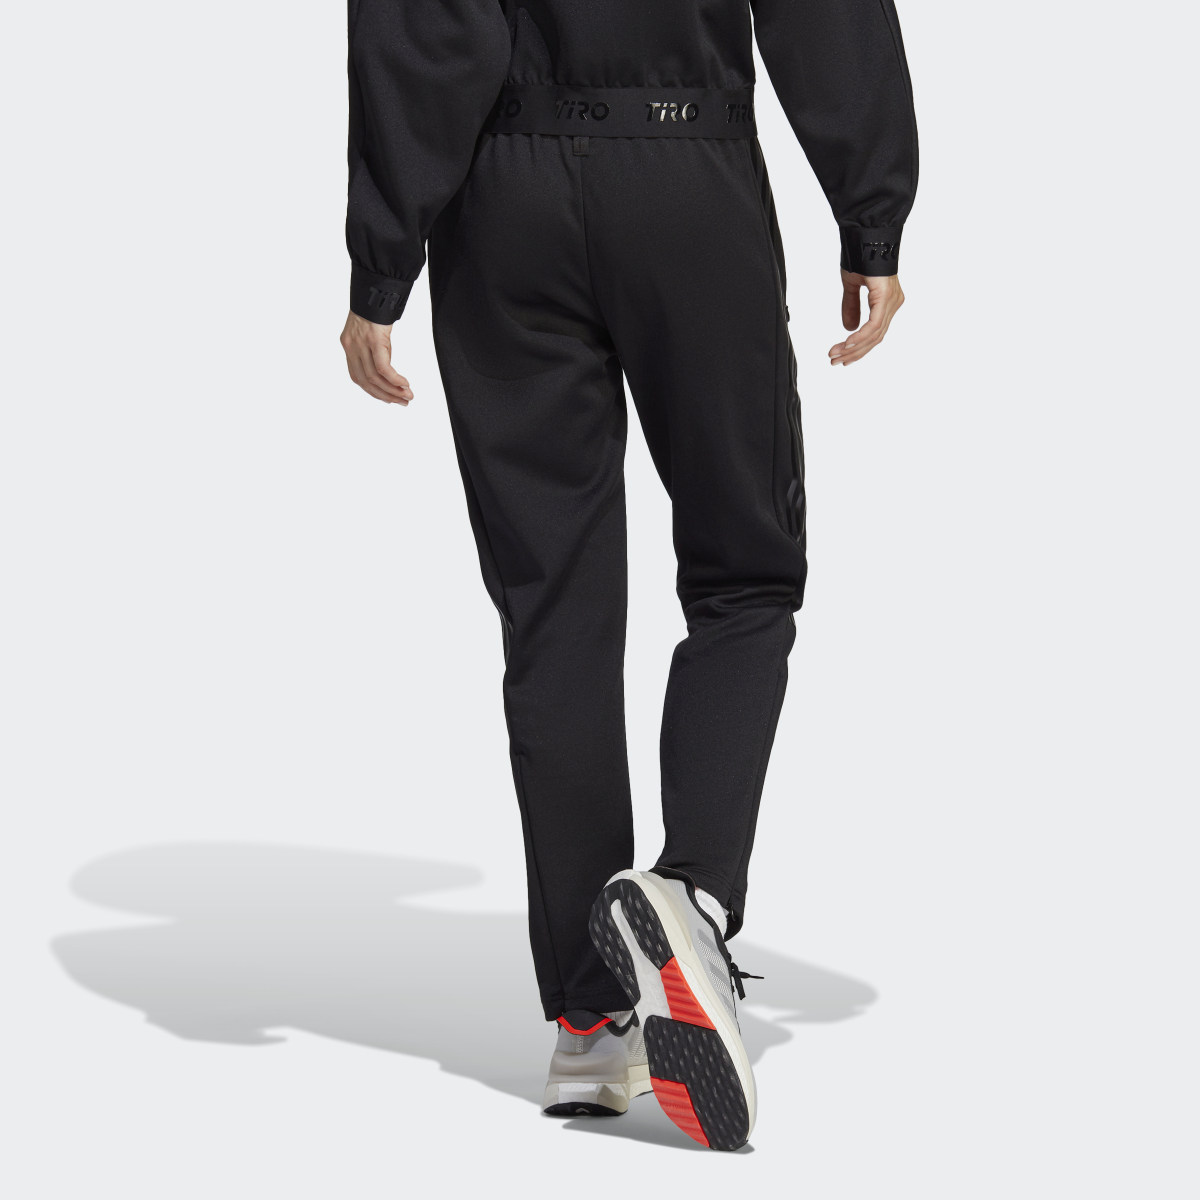 Adidas Tiro Suit-Up Advanced Track Pants. 5